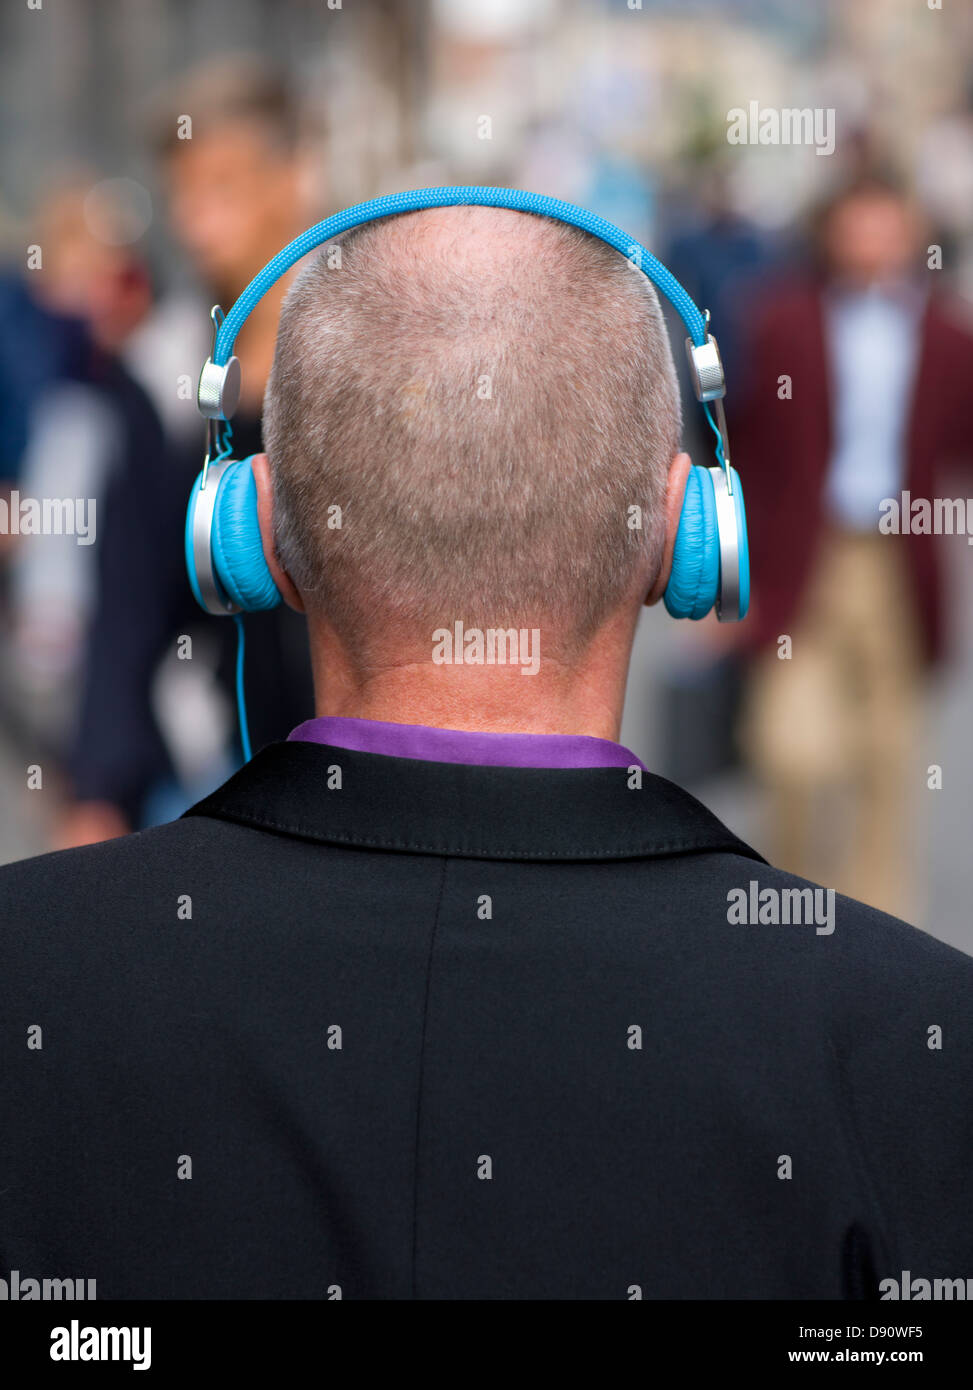 Businessman listening to headphones outdoors Stock Photo